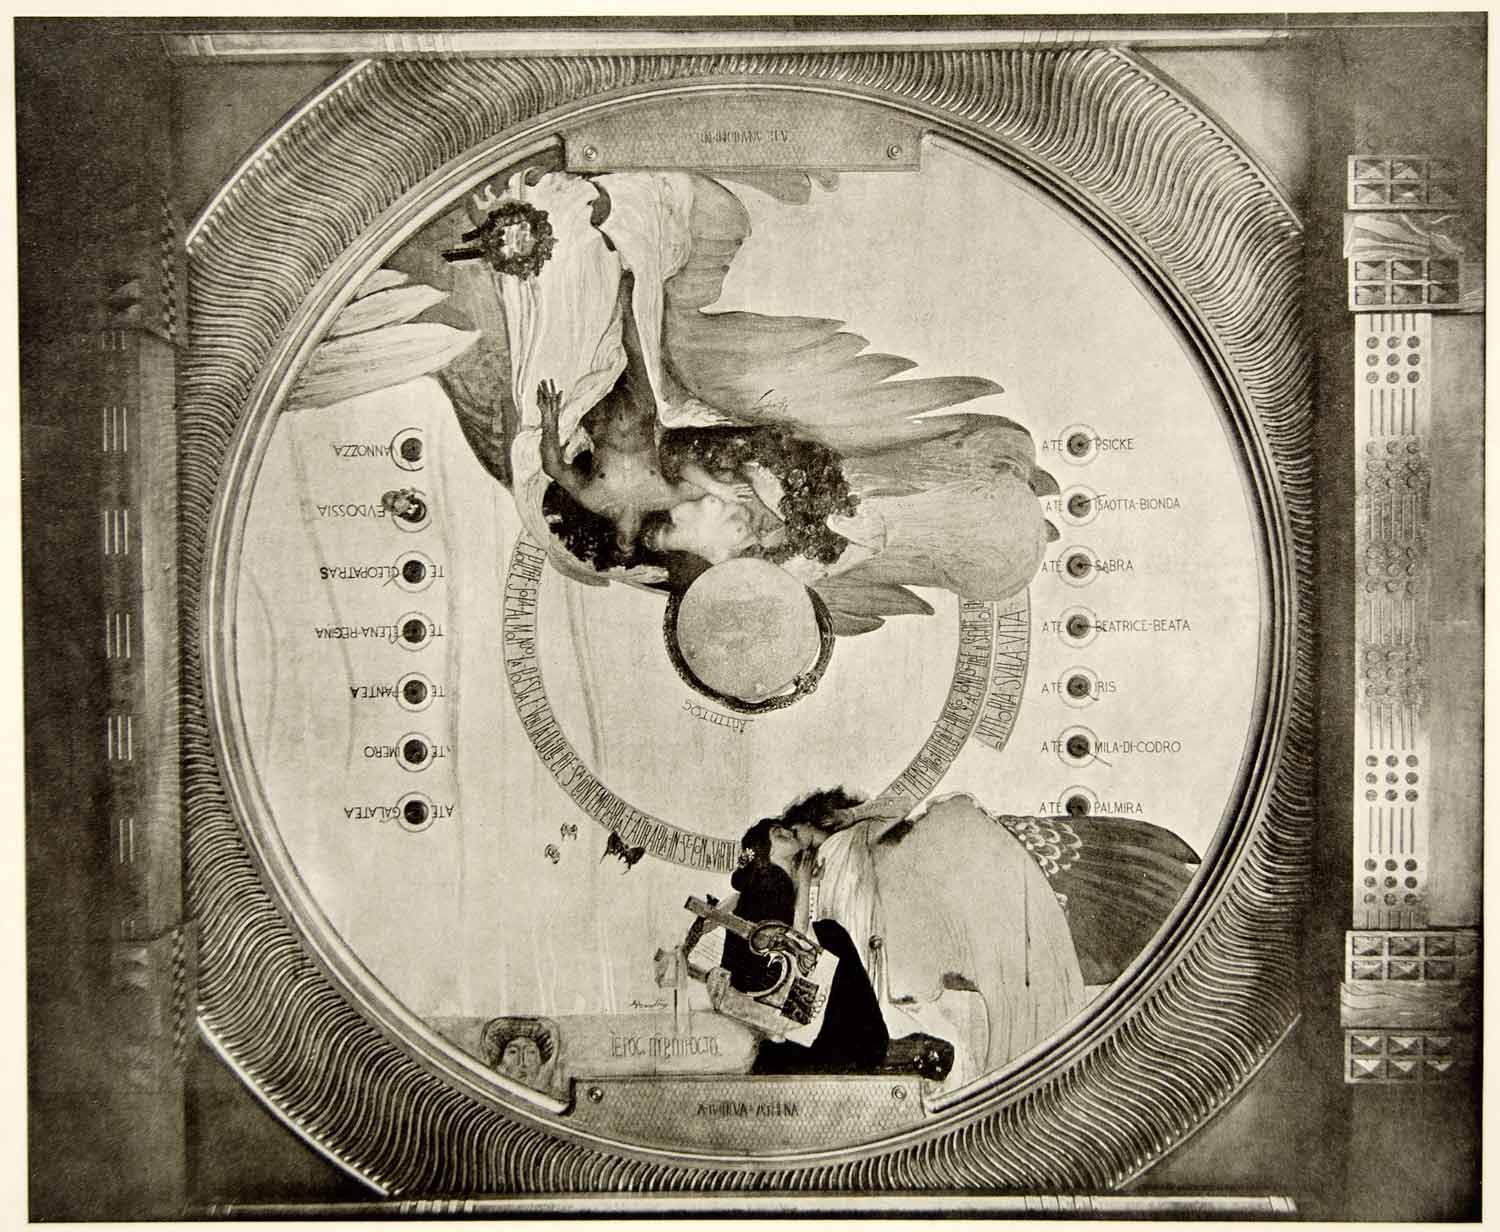 1917 Photolithograph Art Nouveau Ceiling Nudes Music Giulio Bargellini MDA6